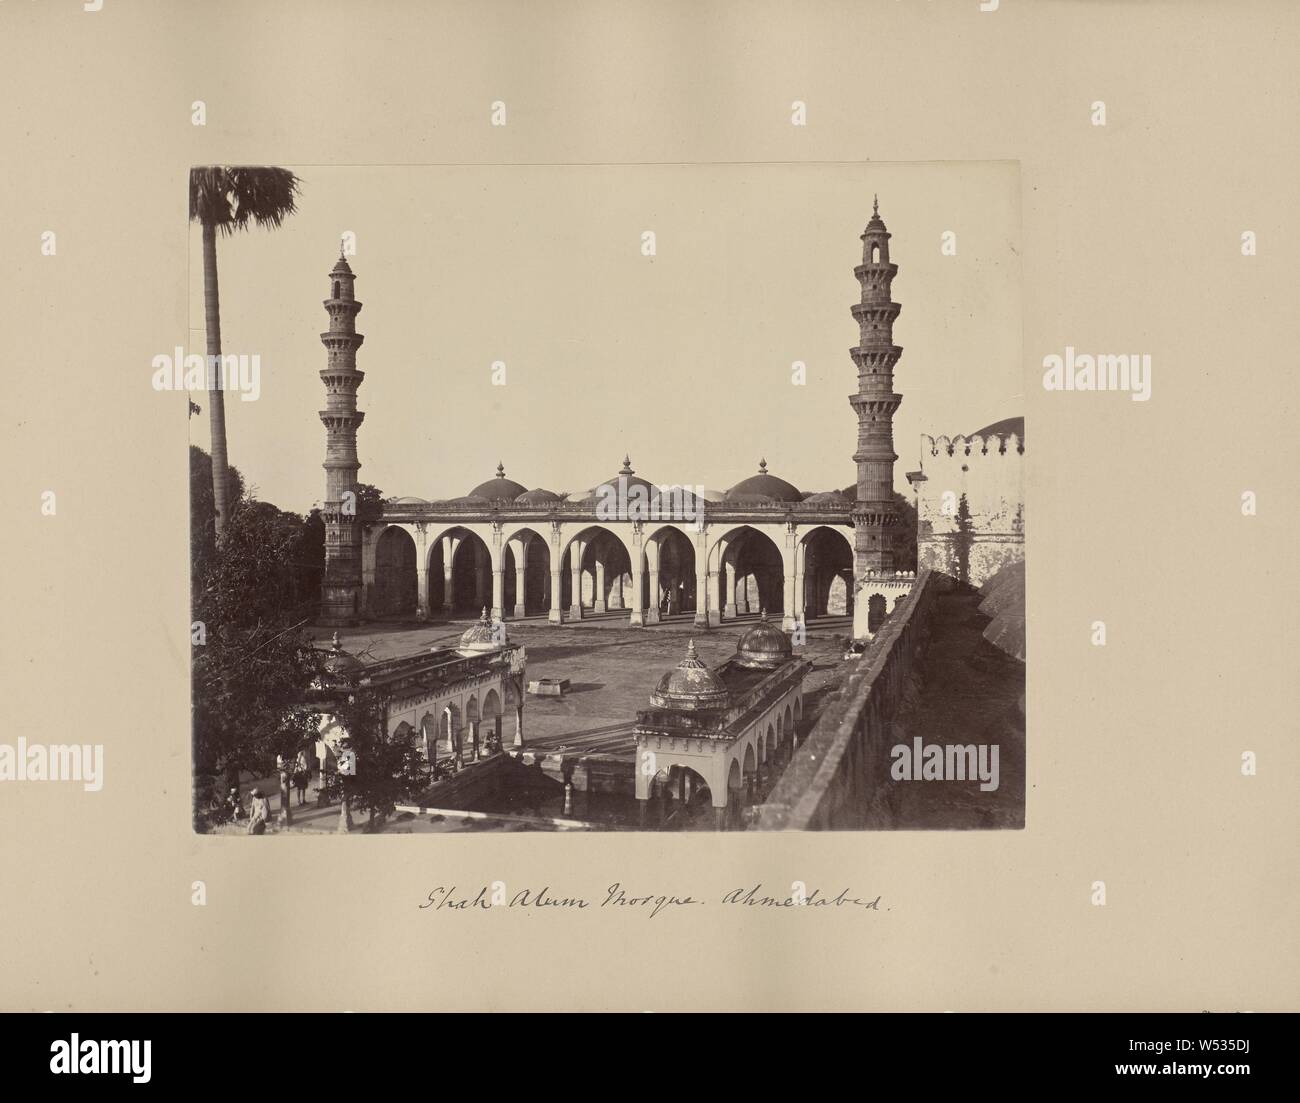 Shah Alum Morque Ahmedabad, Unknown, India, 1886 - 1889, Albumen silver print, 19.5 x 24.3 cm (7 11/16 x 9 9/16 in Stock Photo